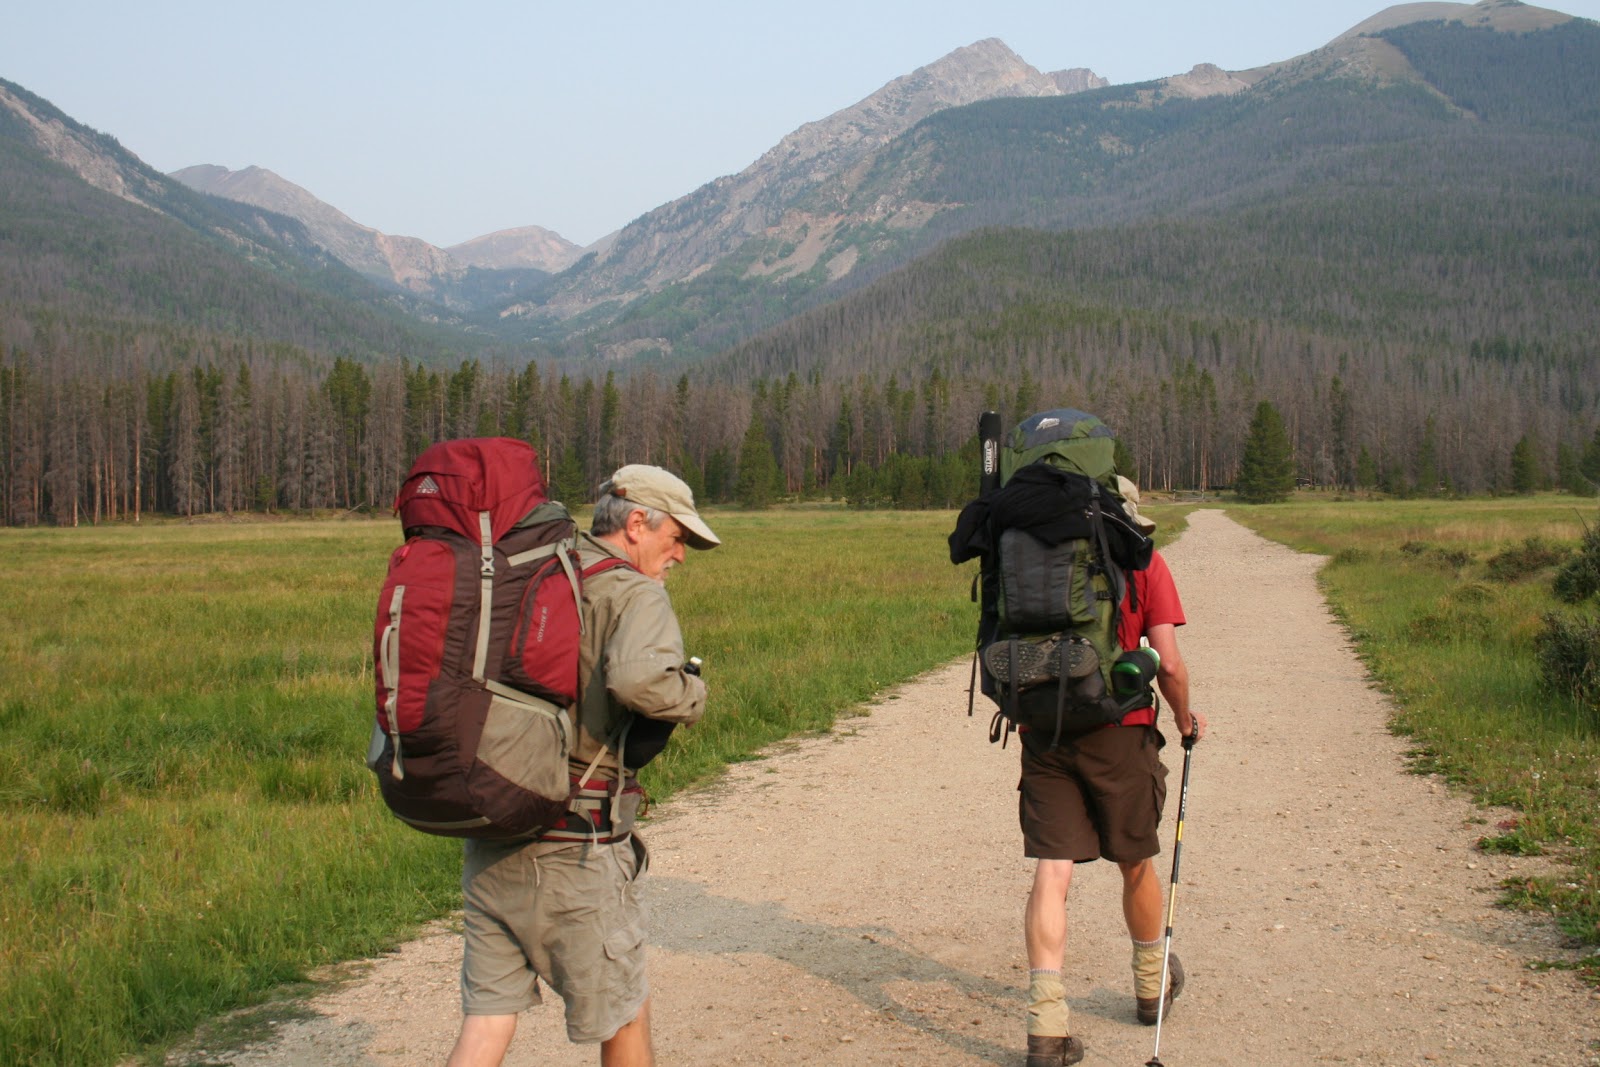 The Hiker: Never Summer Wilderness - A Place of Bewildering Vastness